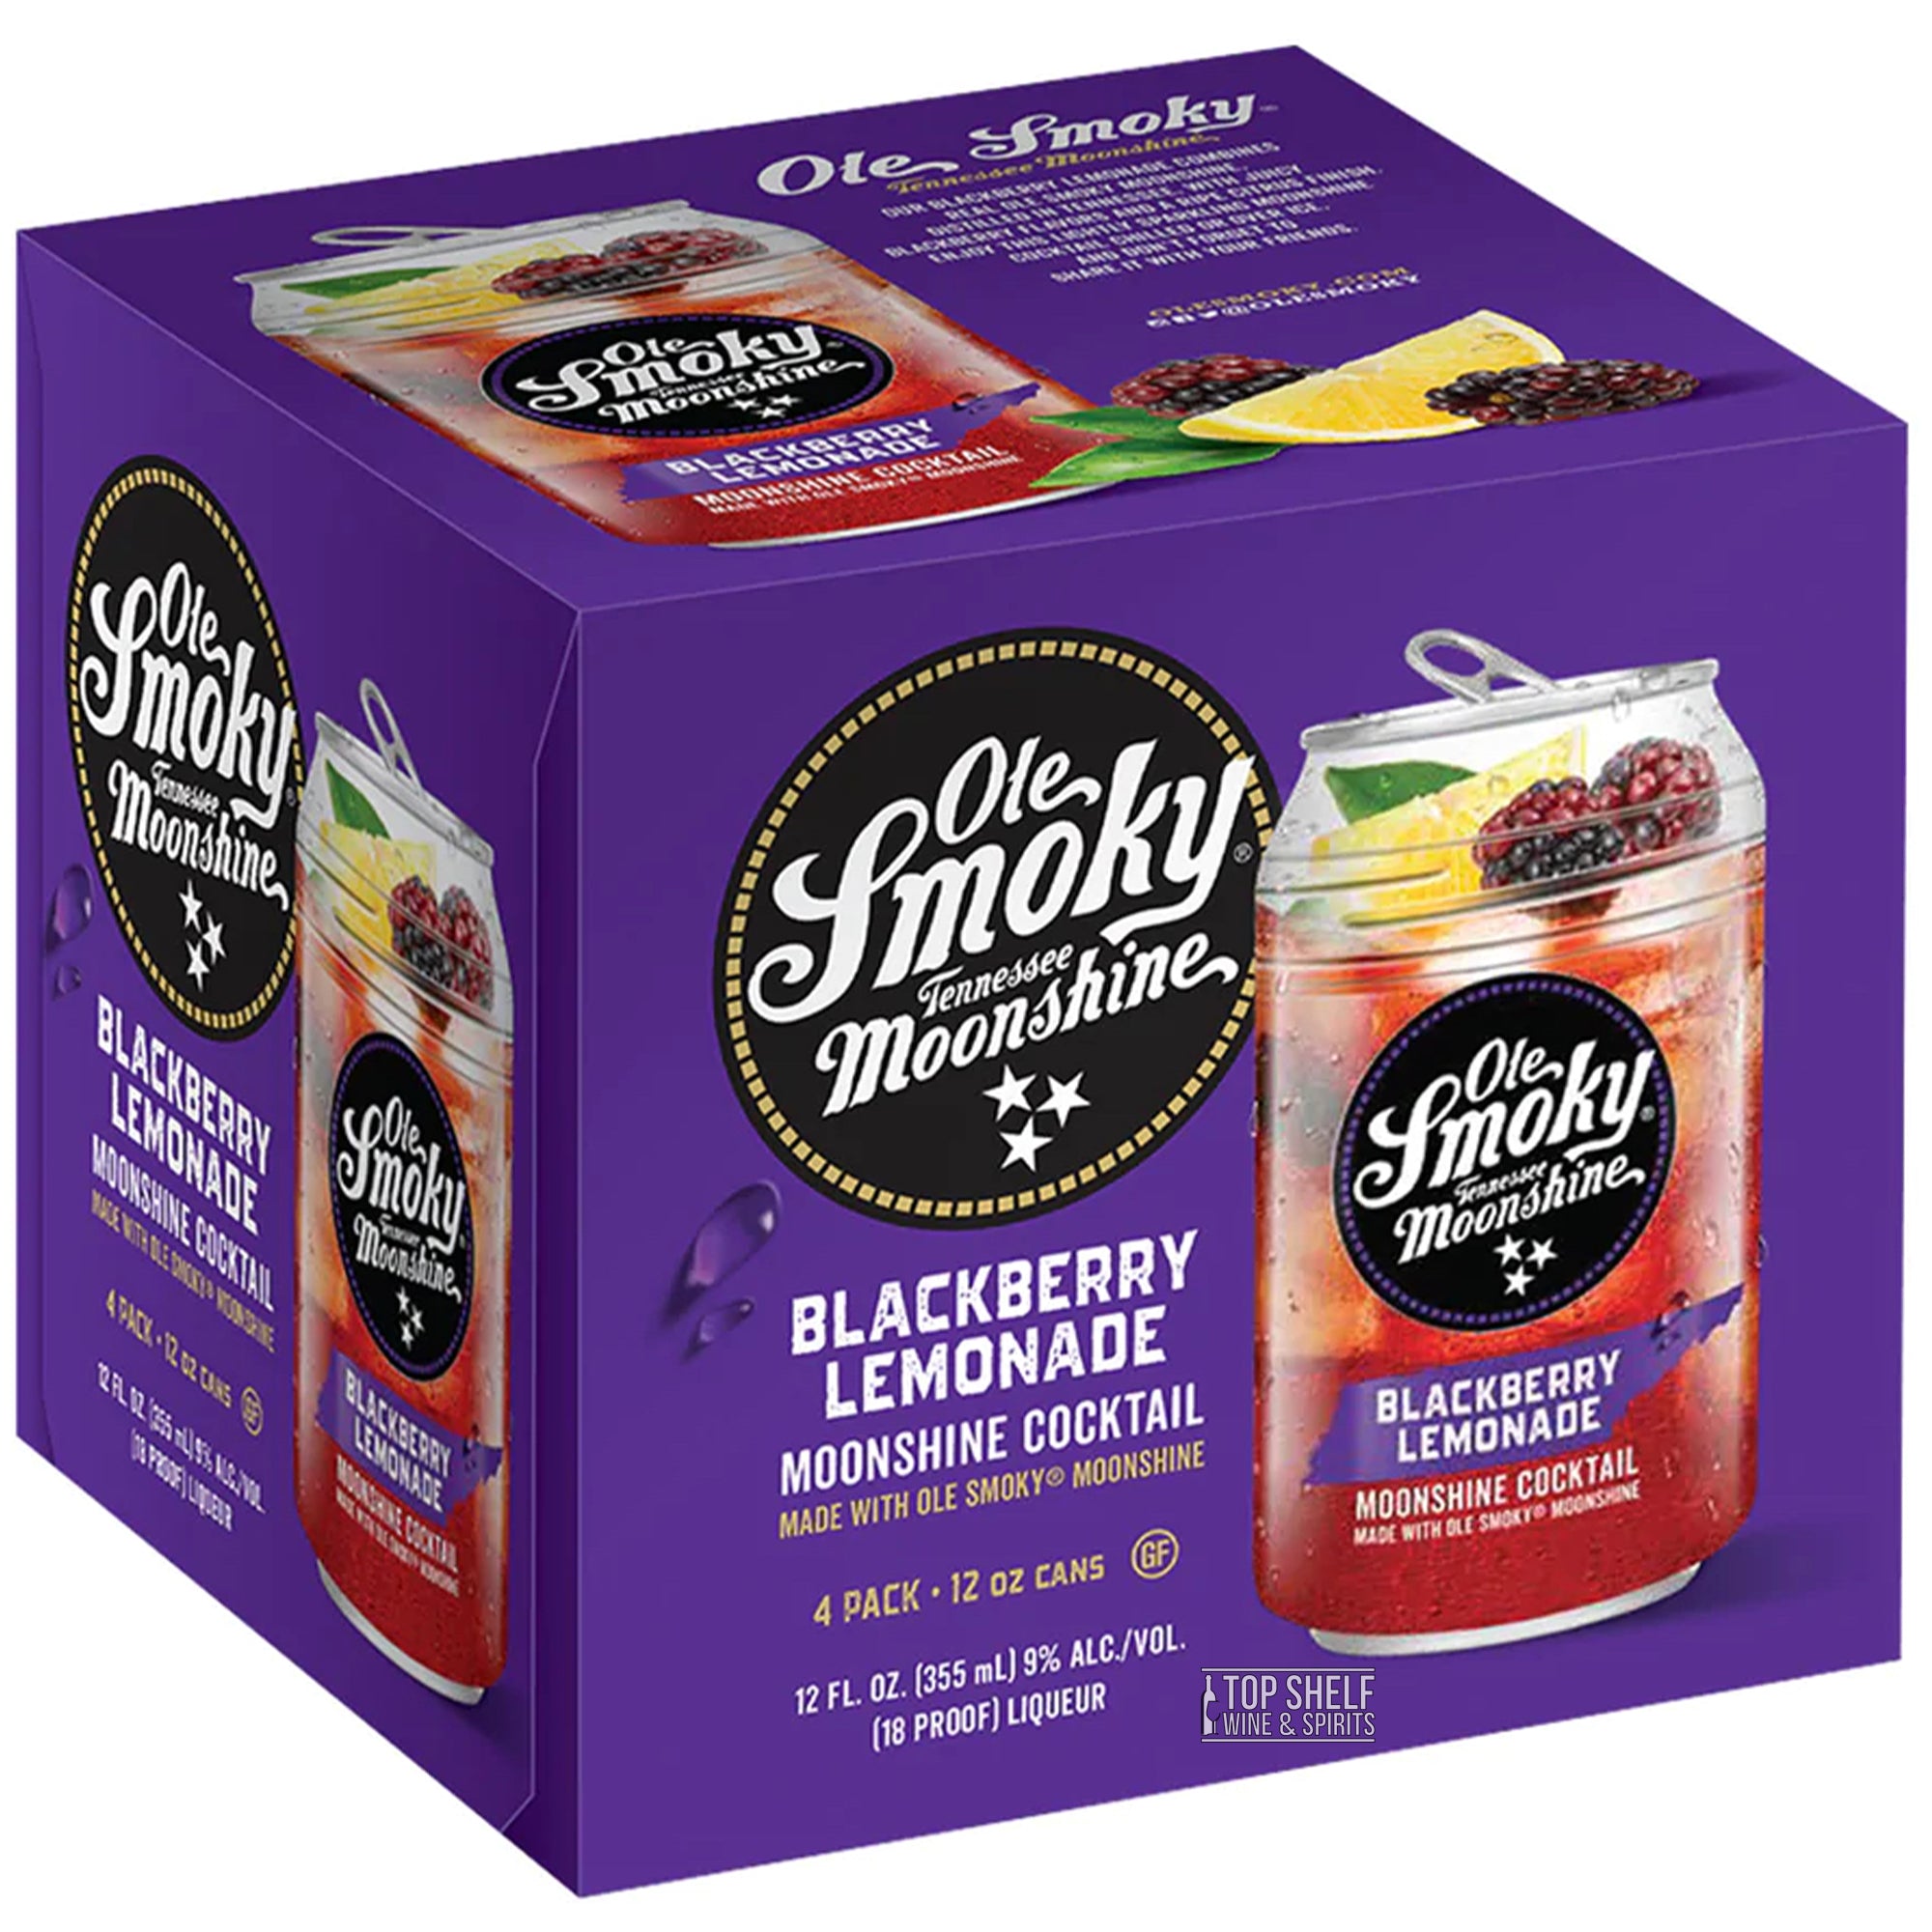 Ole Smoky Blackberry Lemonade Moonshine Cocktail (4 Pack cans)